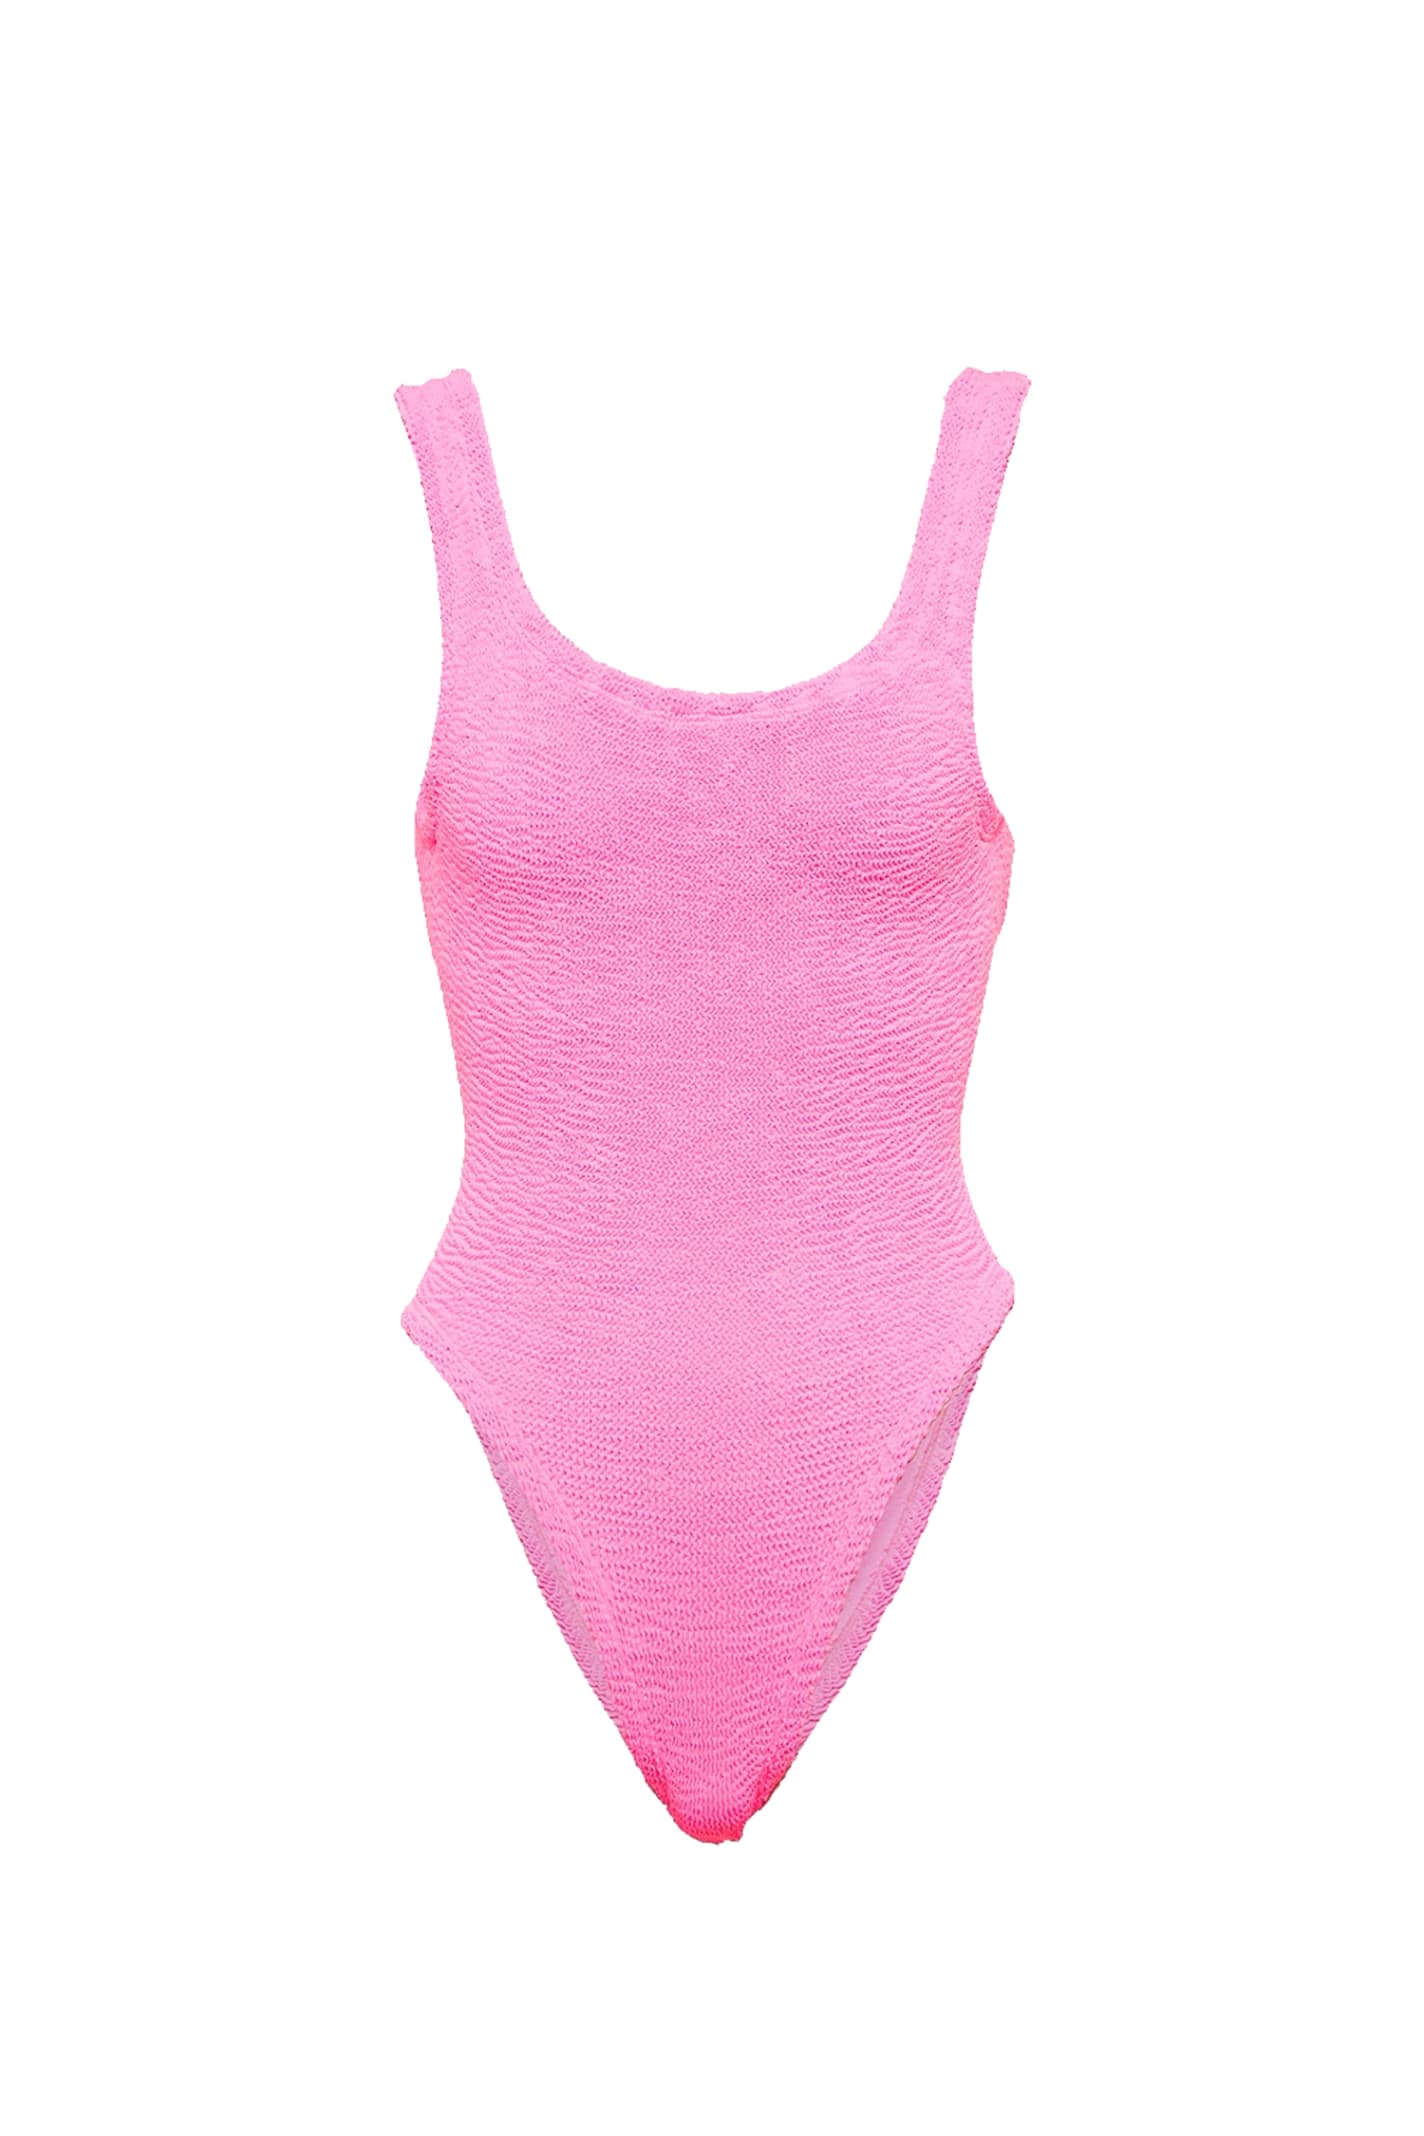 Hunza G Square Beachwear In Pink